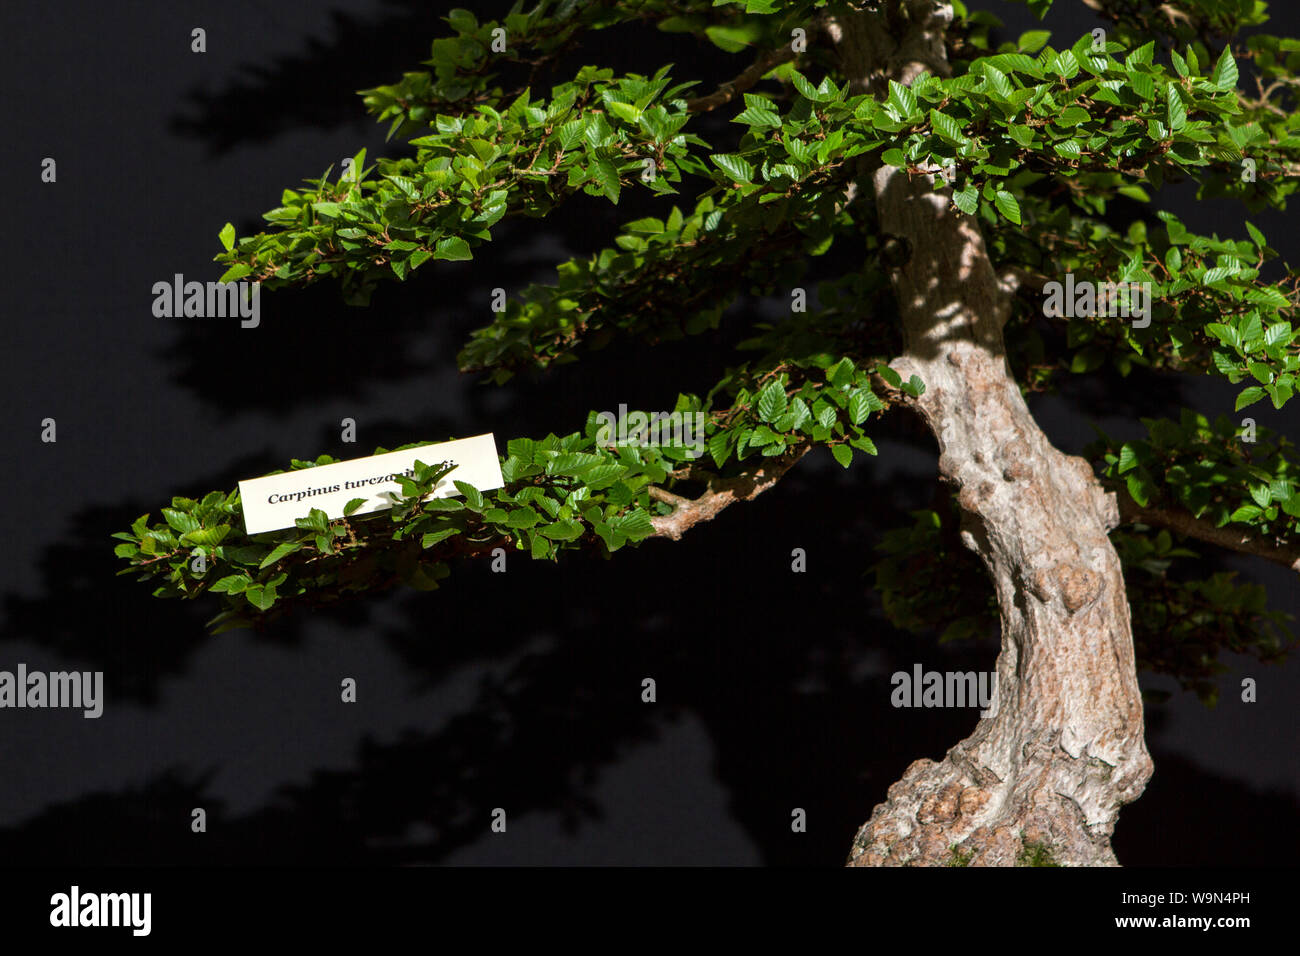 a carpinus bonsai tree miniature oriental japanese garden plant Stock Photo